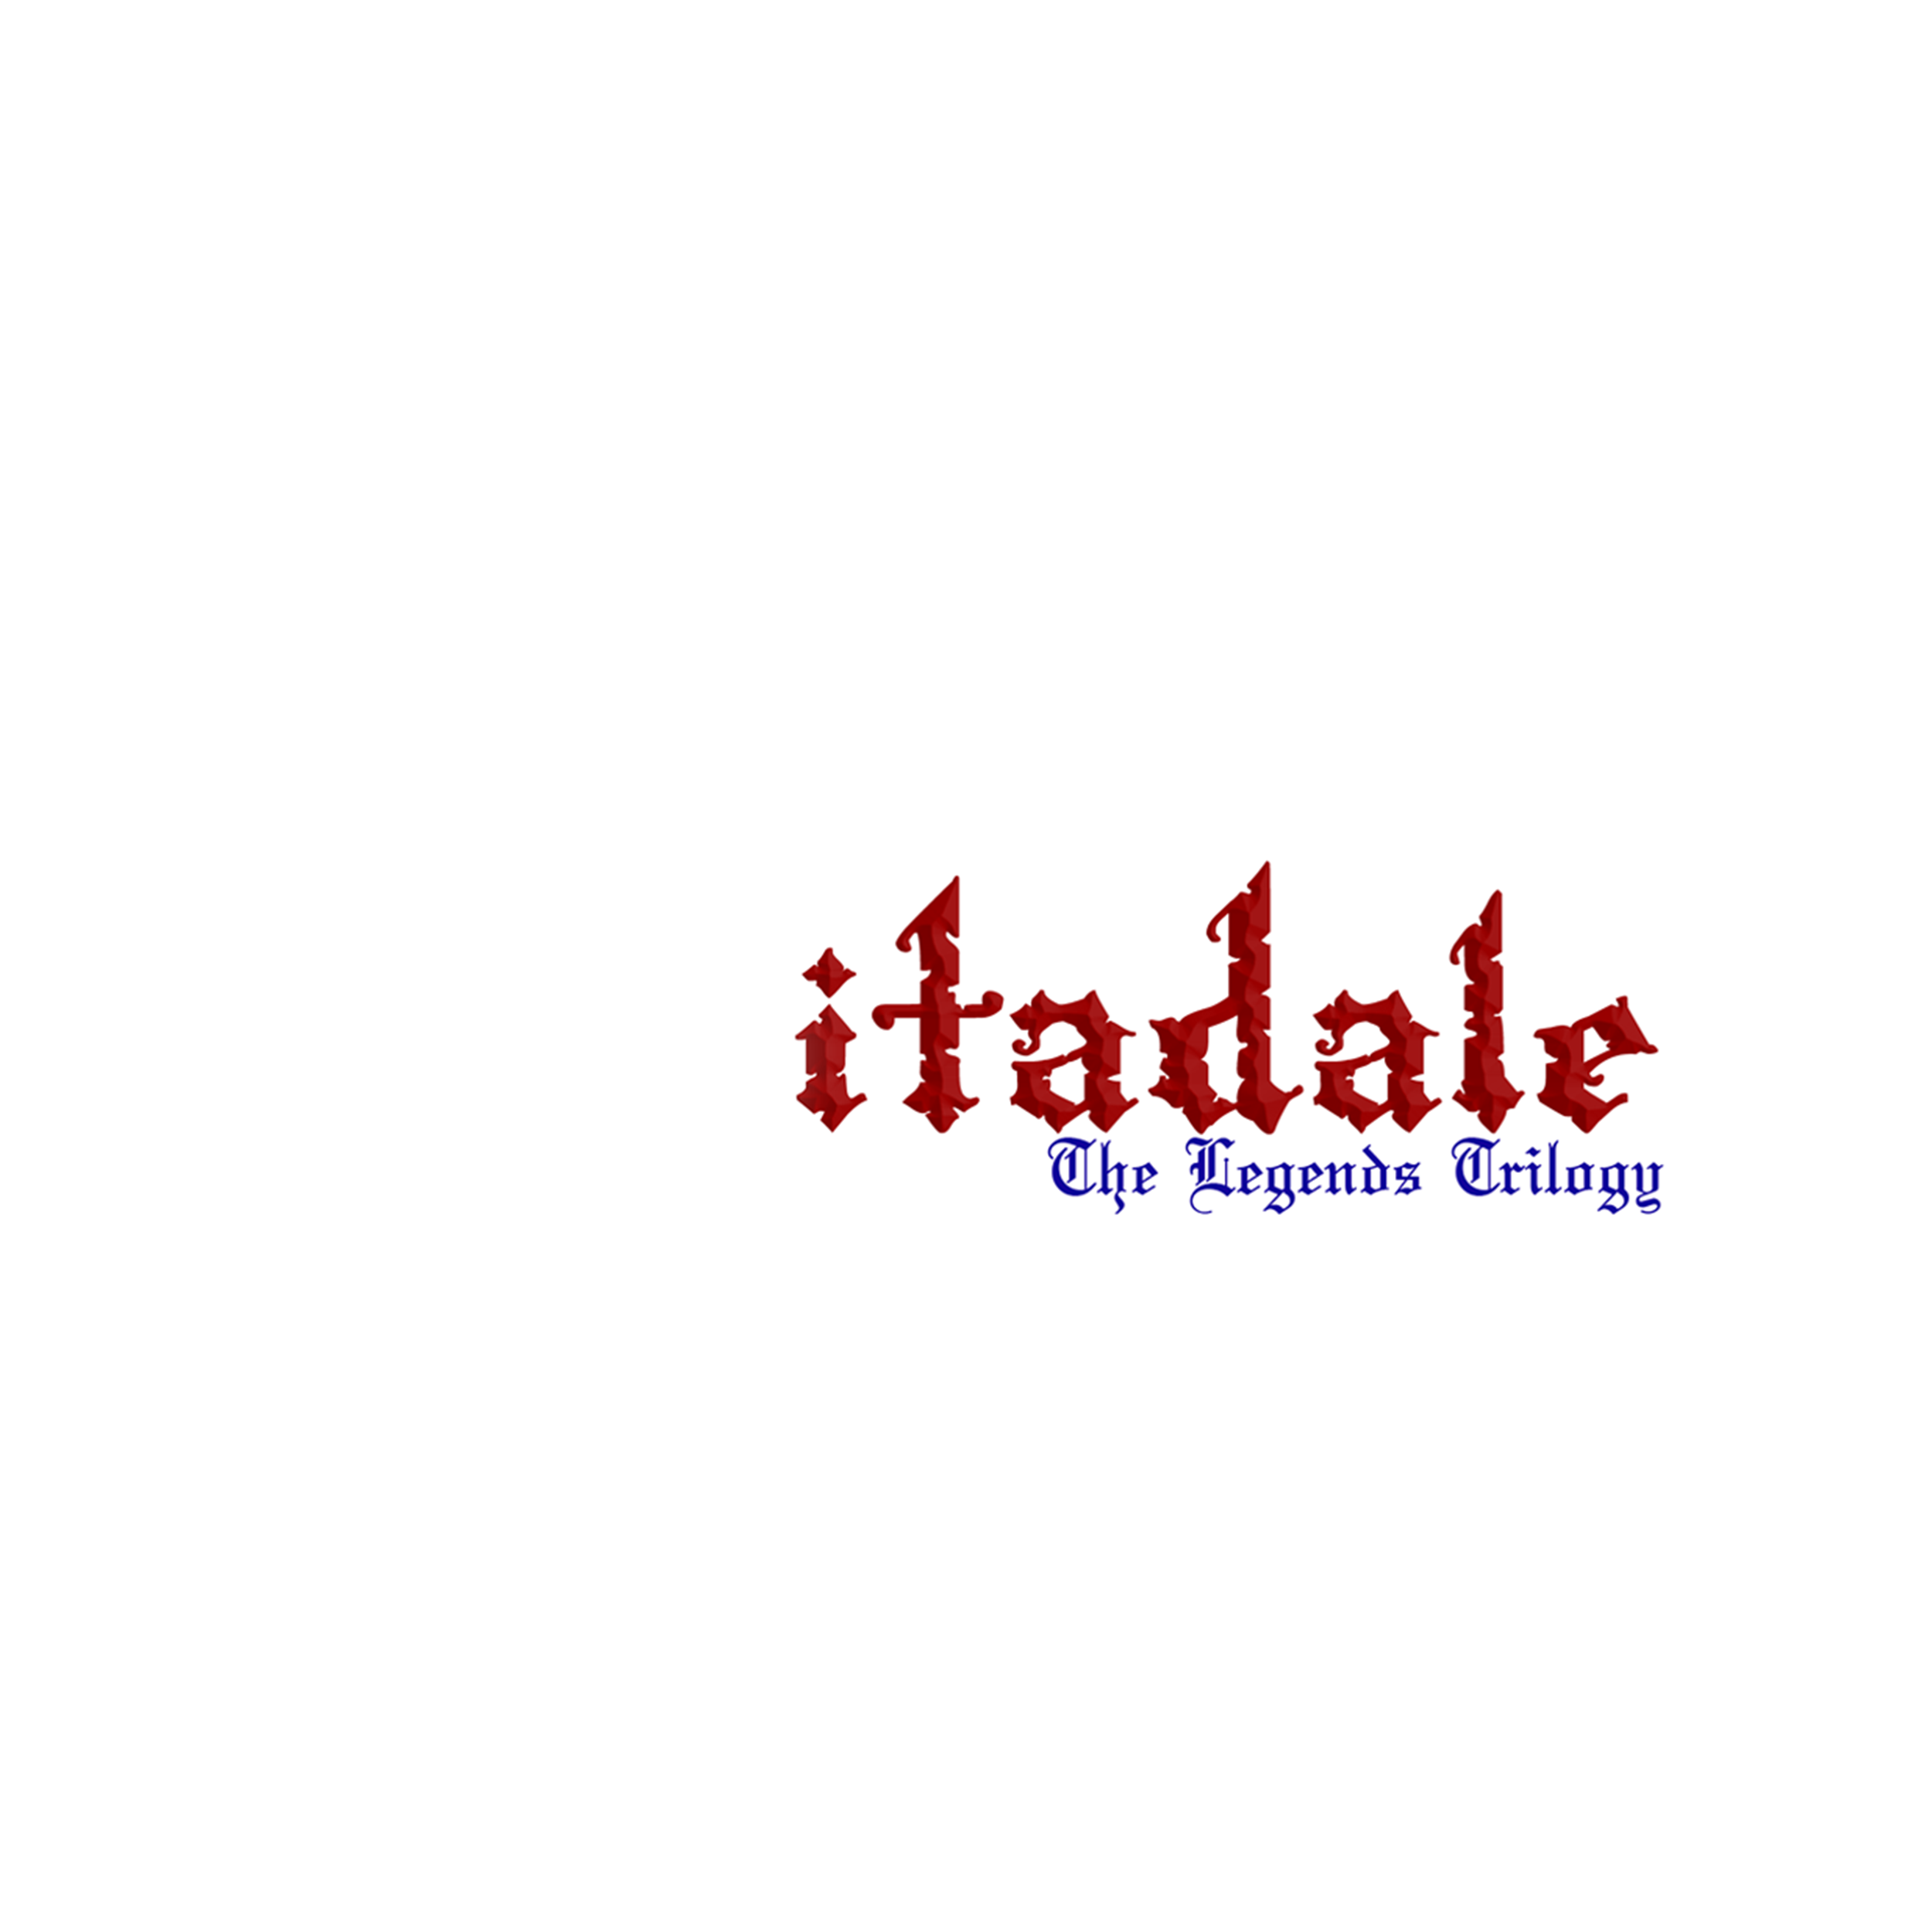 Citadale: The Legends Trilogy logo